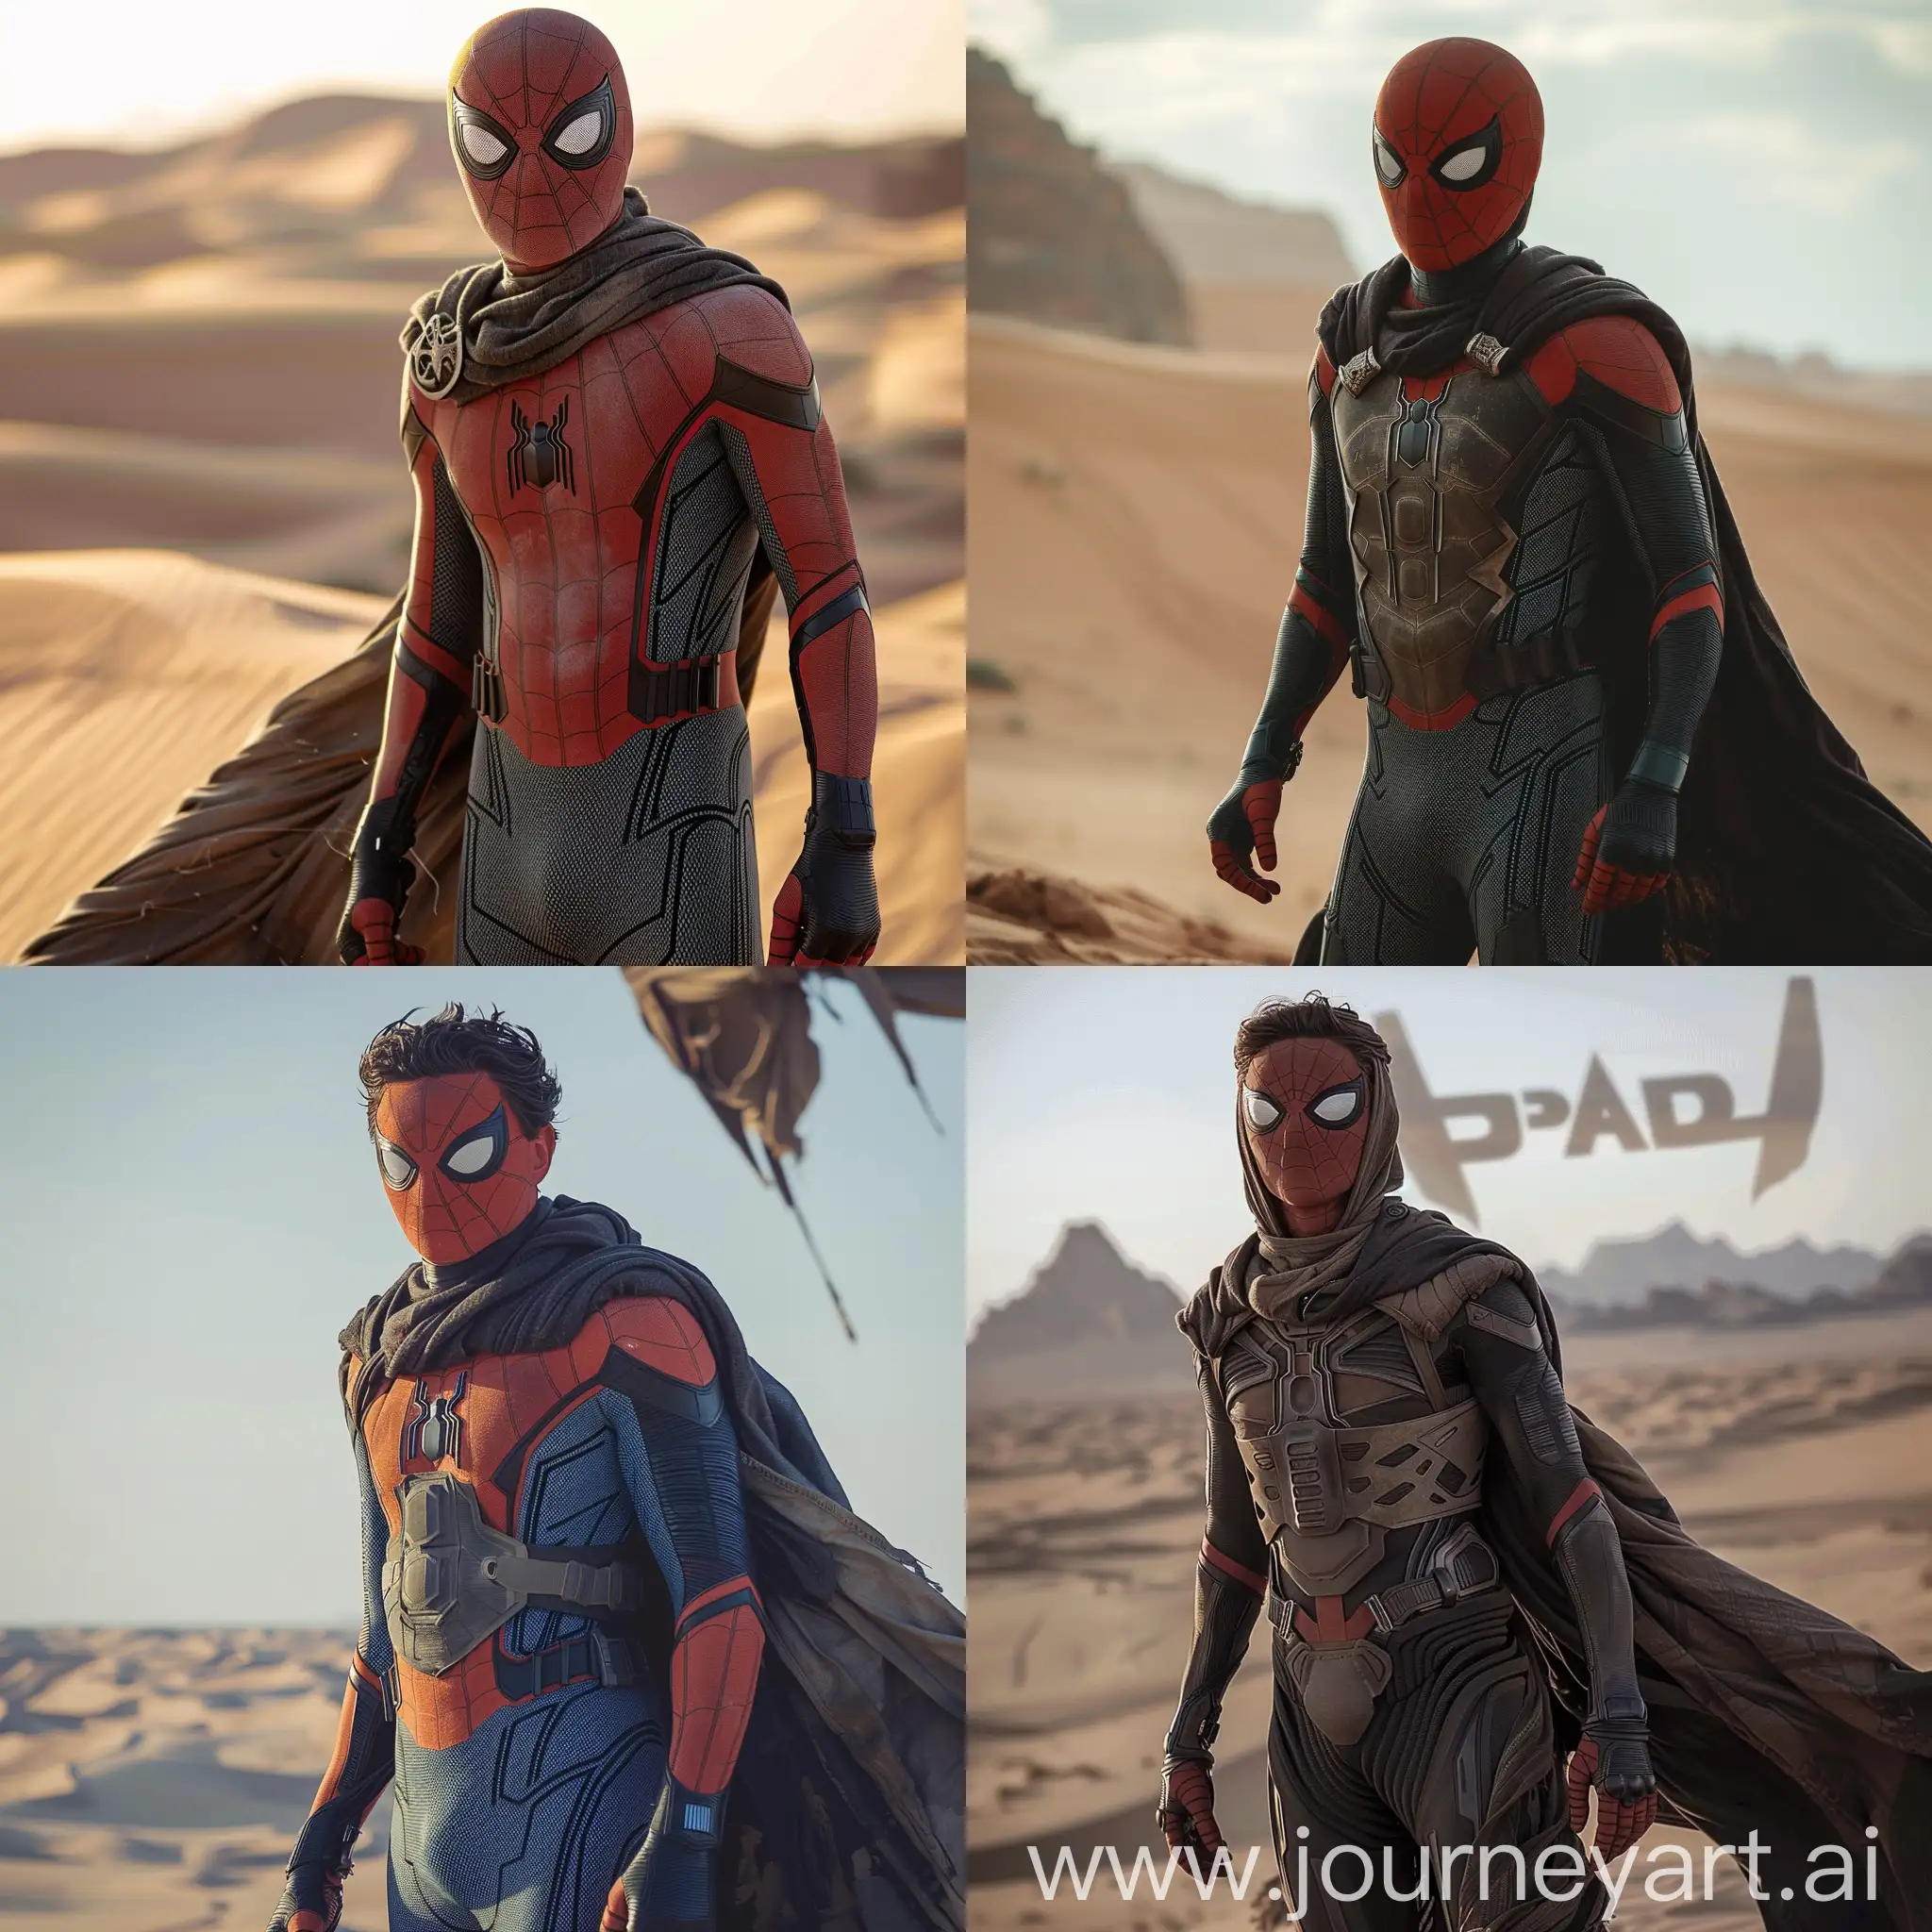 Spiderman-in-Dune-Universe